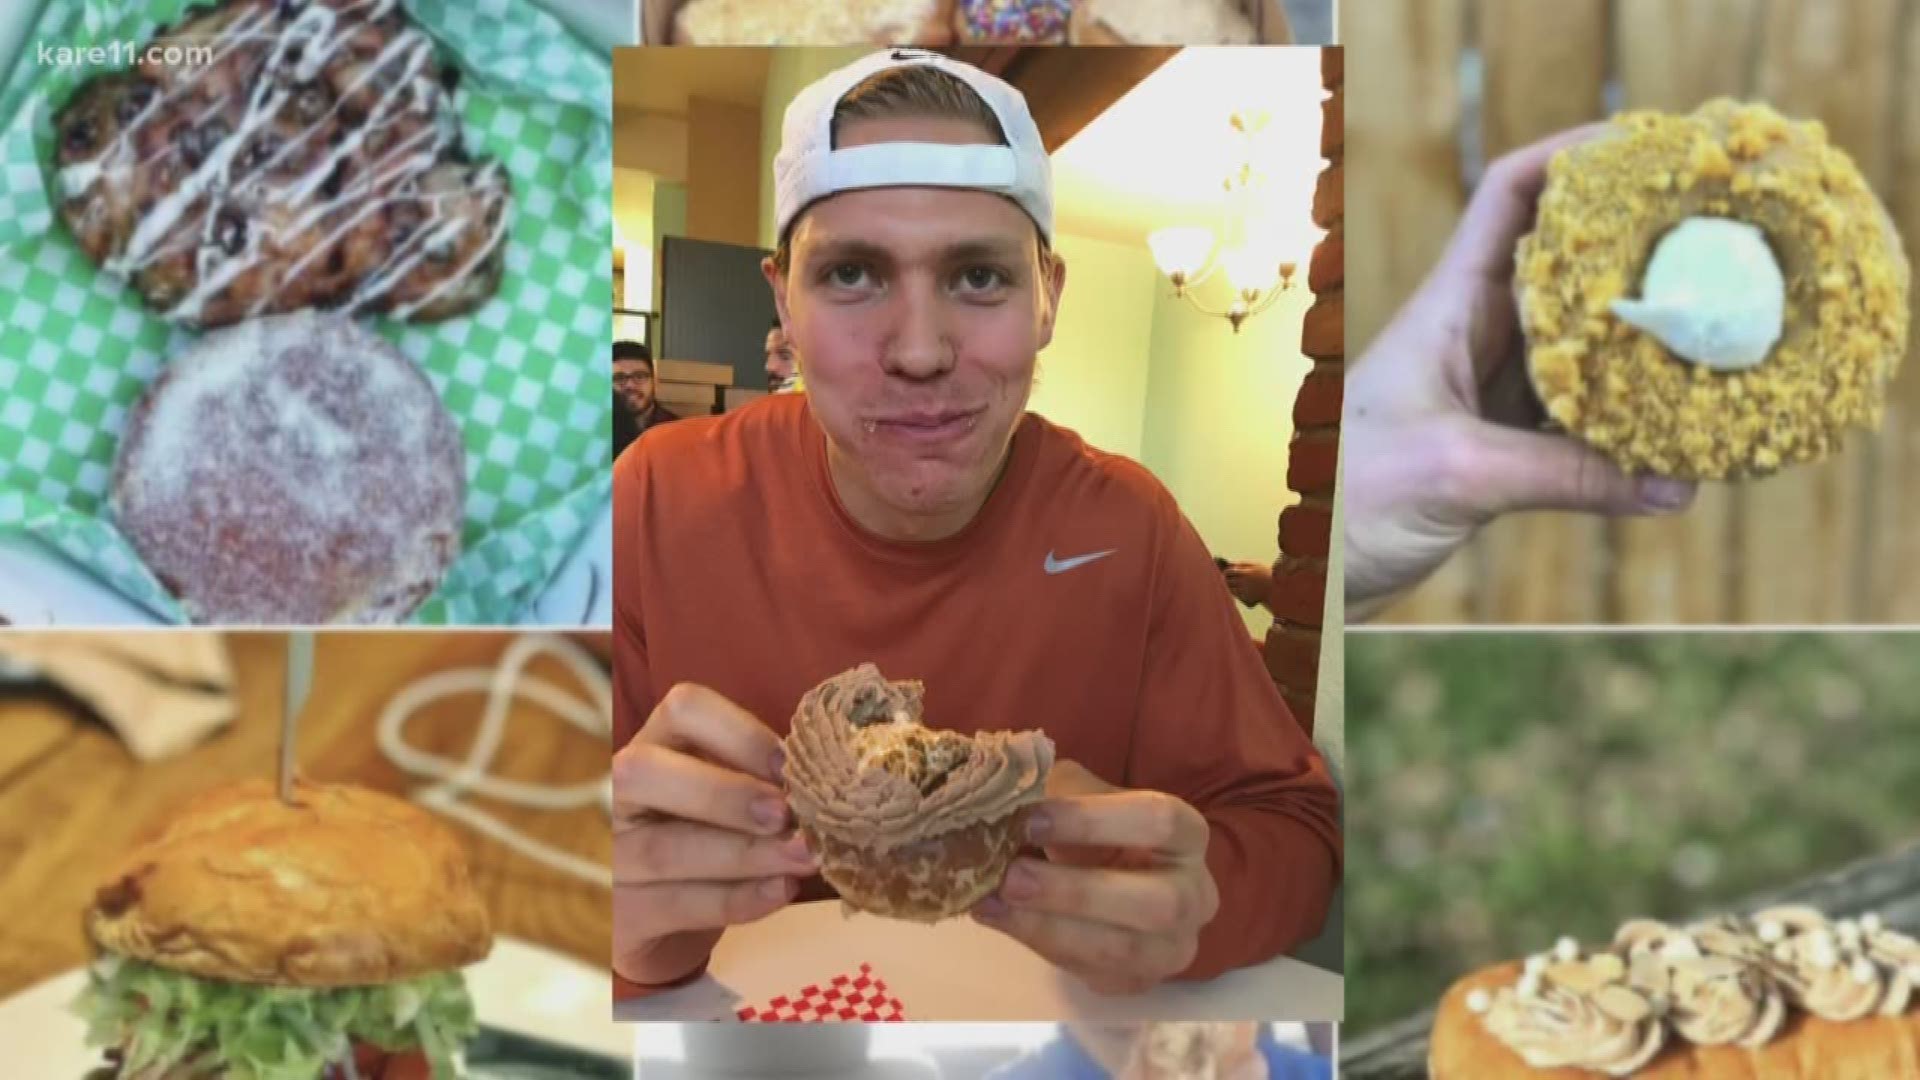 Former MN football star now tackling donuts